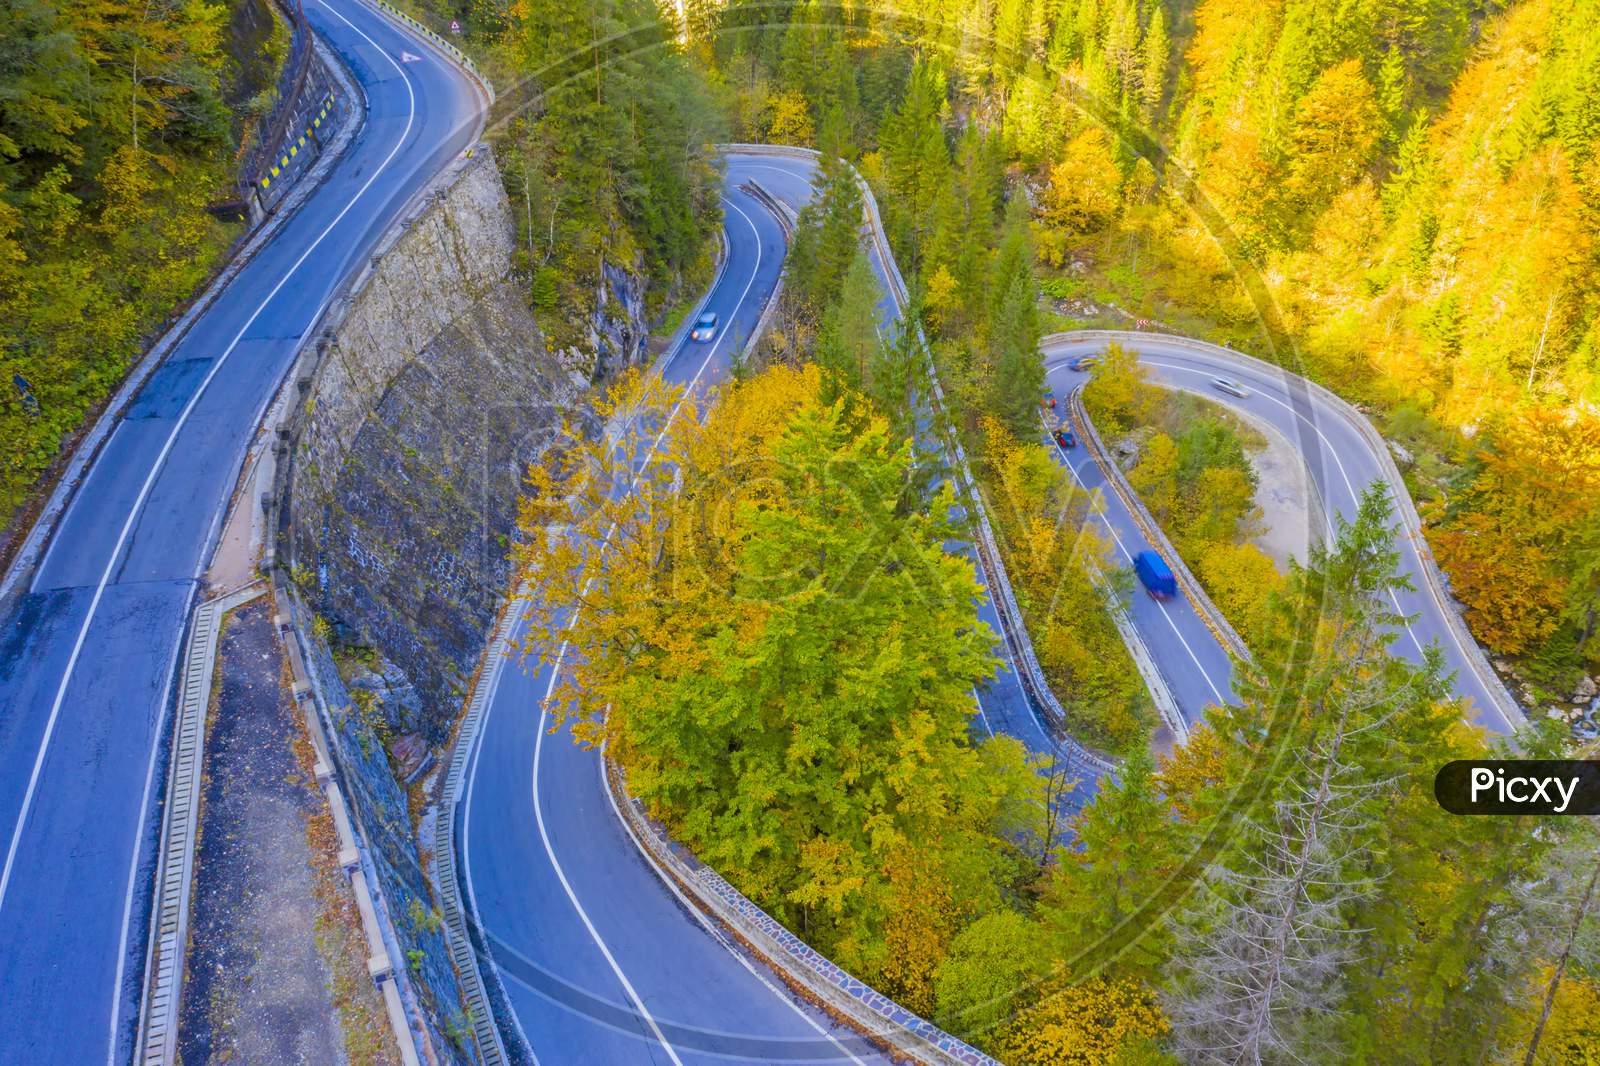 Serpentine Mountain Road In Autumn